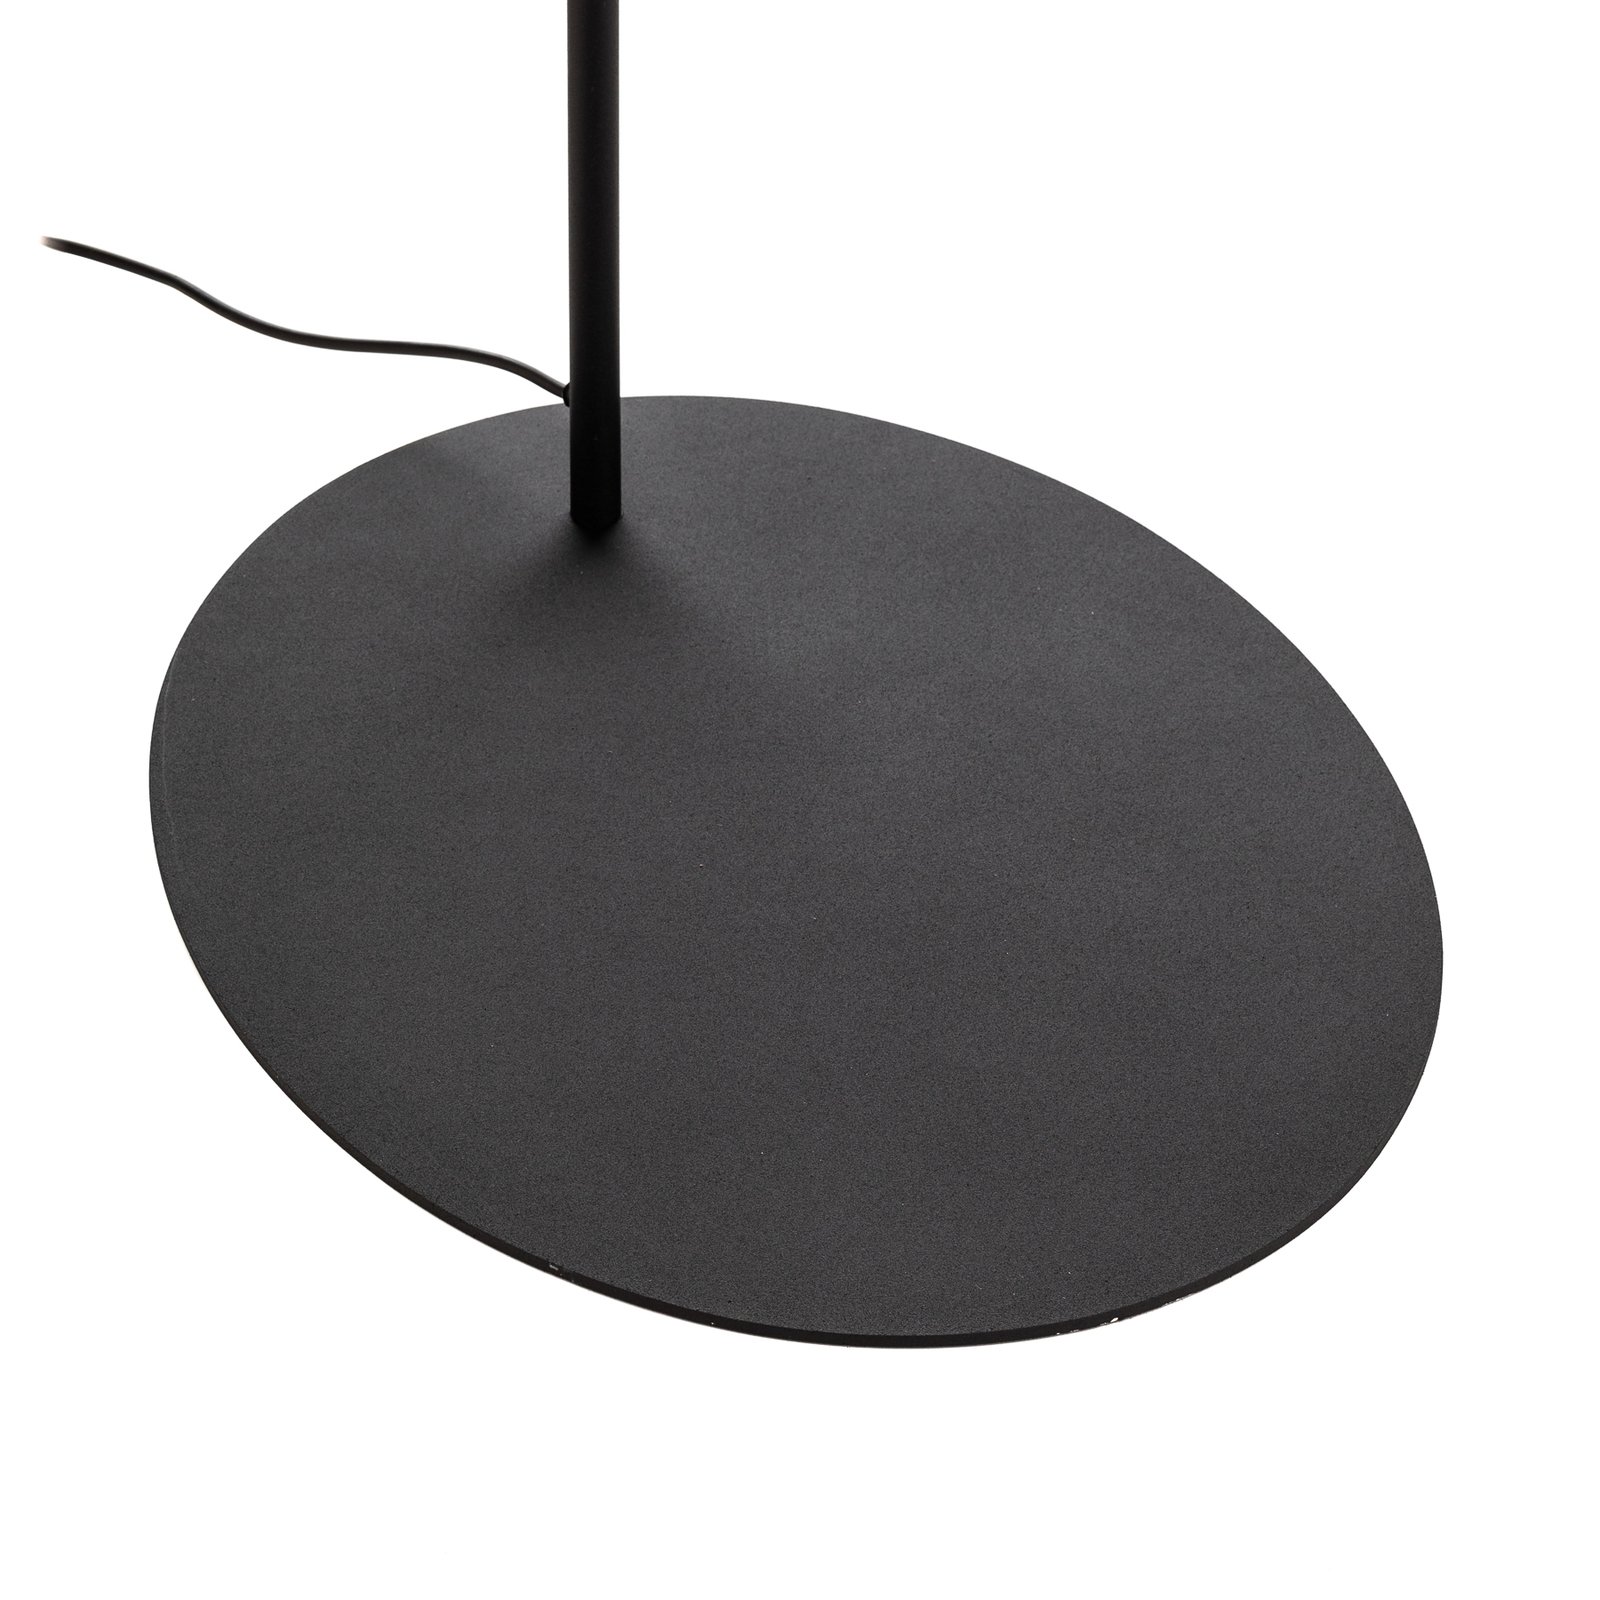 Moby Black textile floor lamp